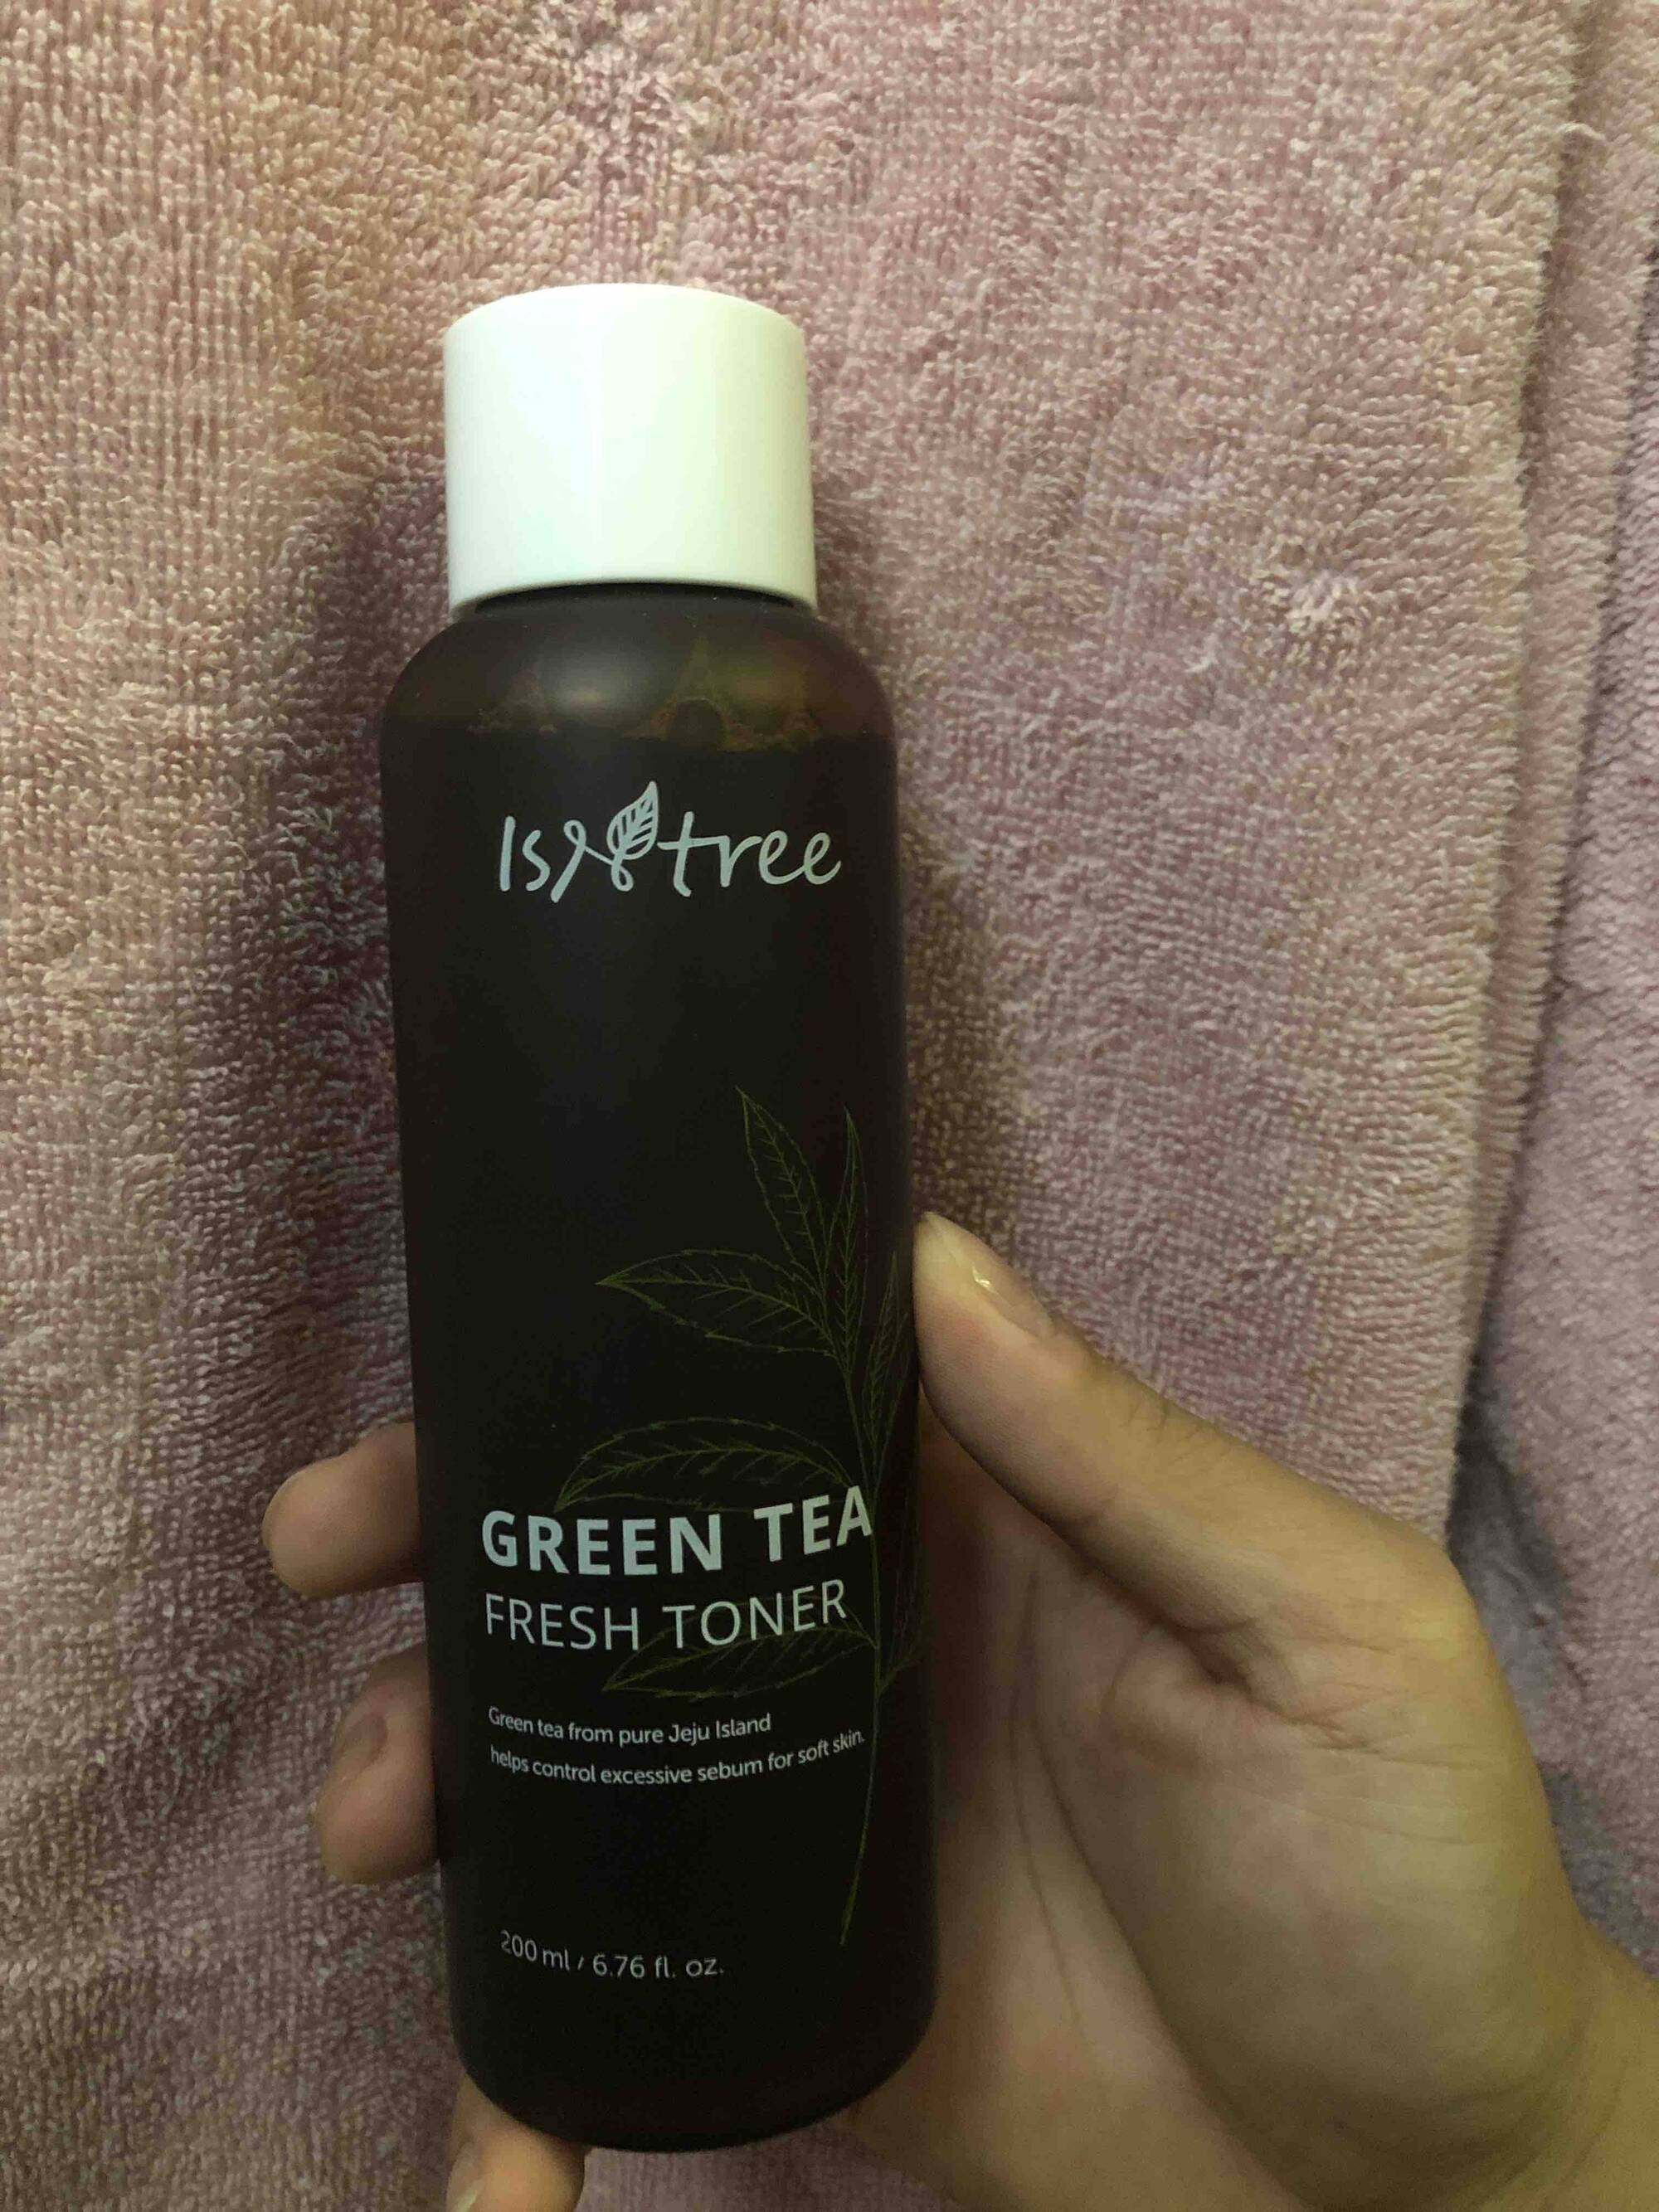 ISNTREE - Green tea - Fresh tonner